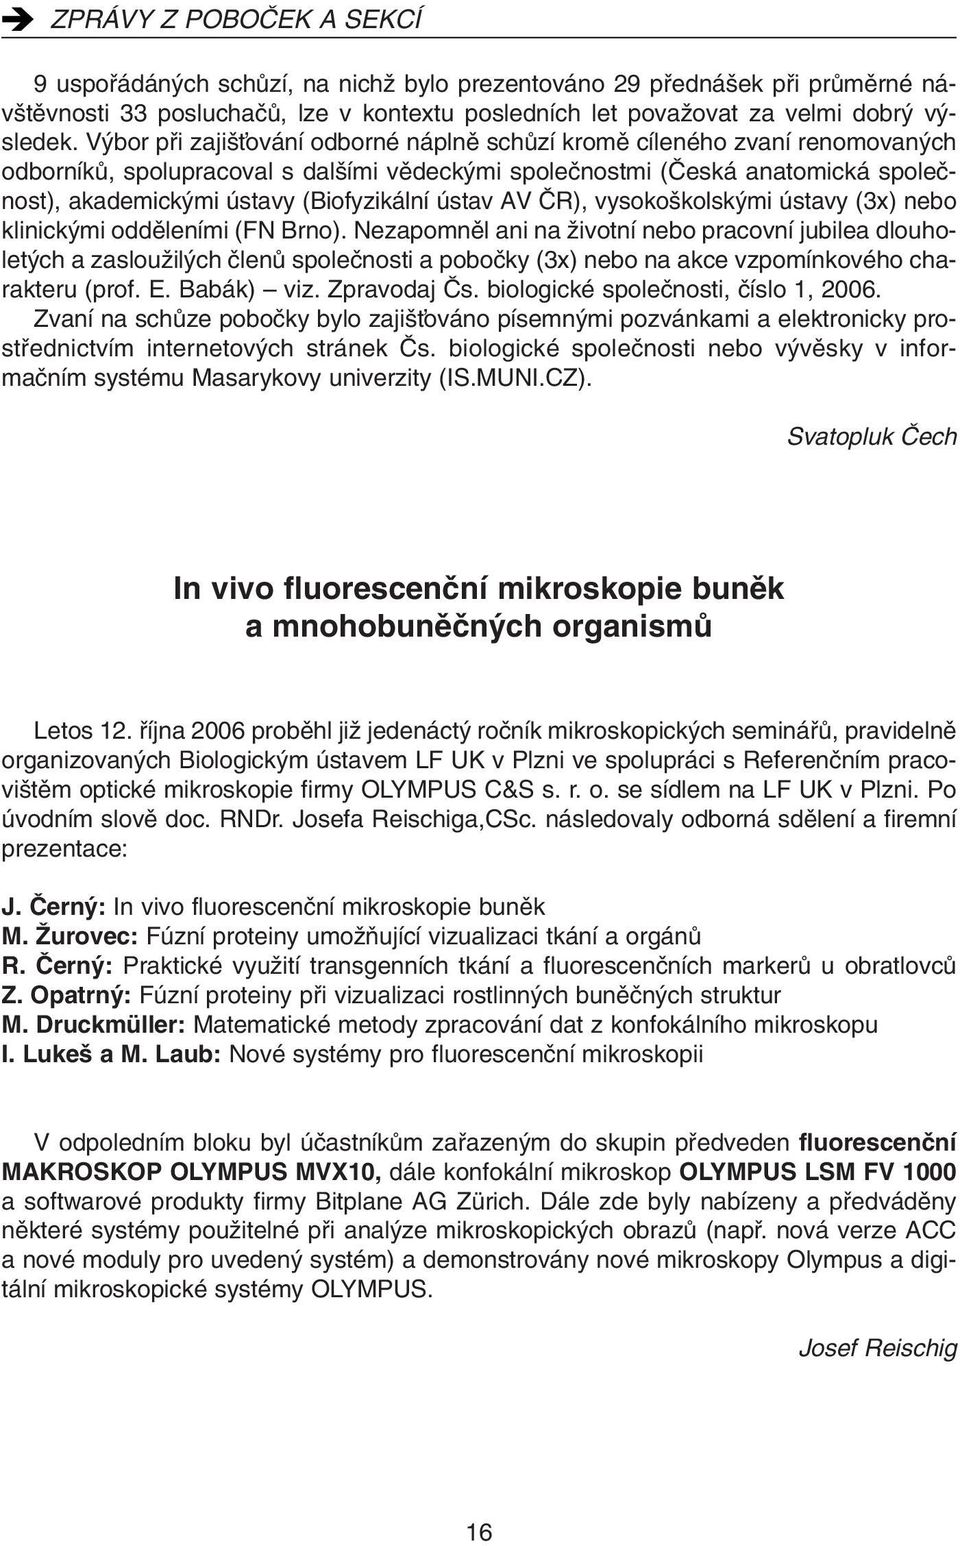 (Biofyzikální ústav AV âr), vysoko kolsk mi ústavy (3x) nebo klinick mi oddûleními (FN Brno).